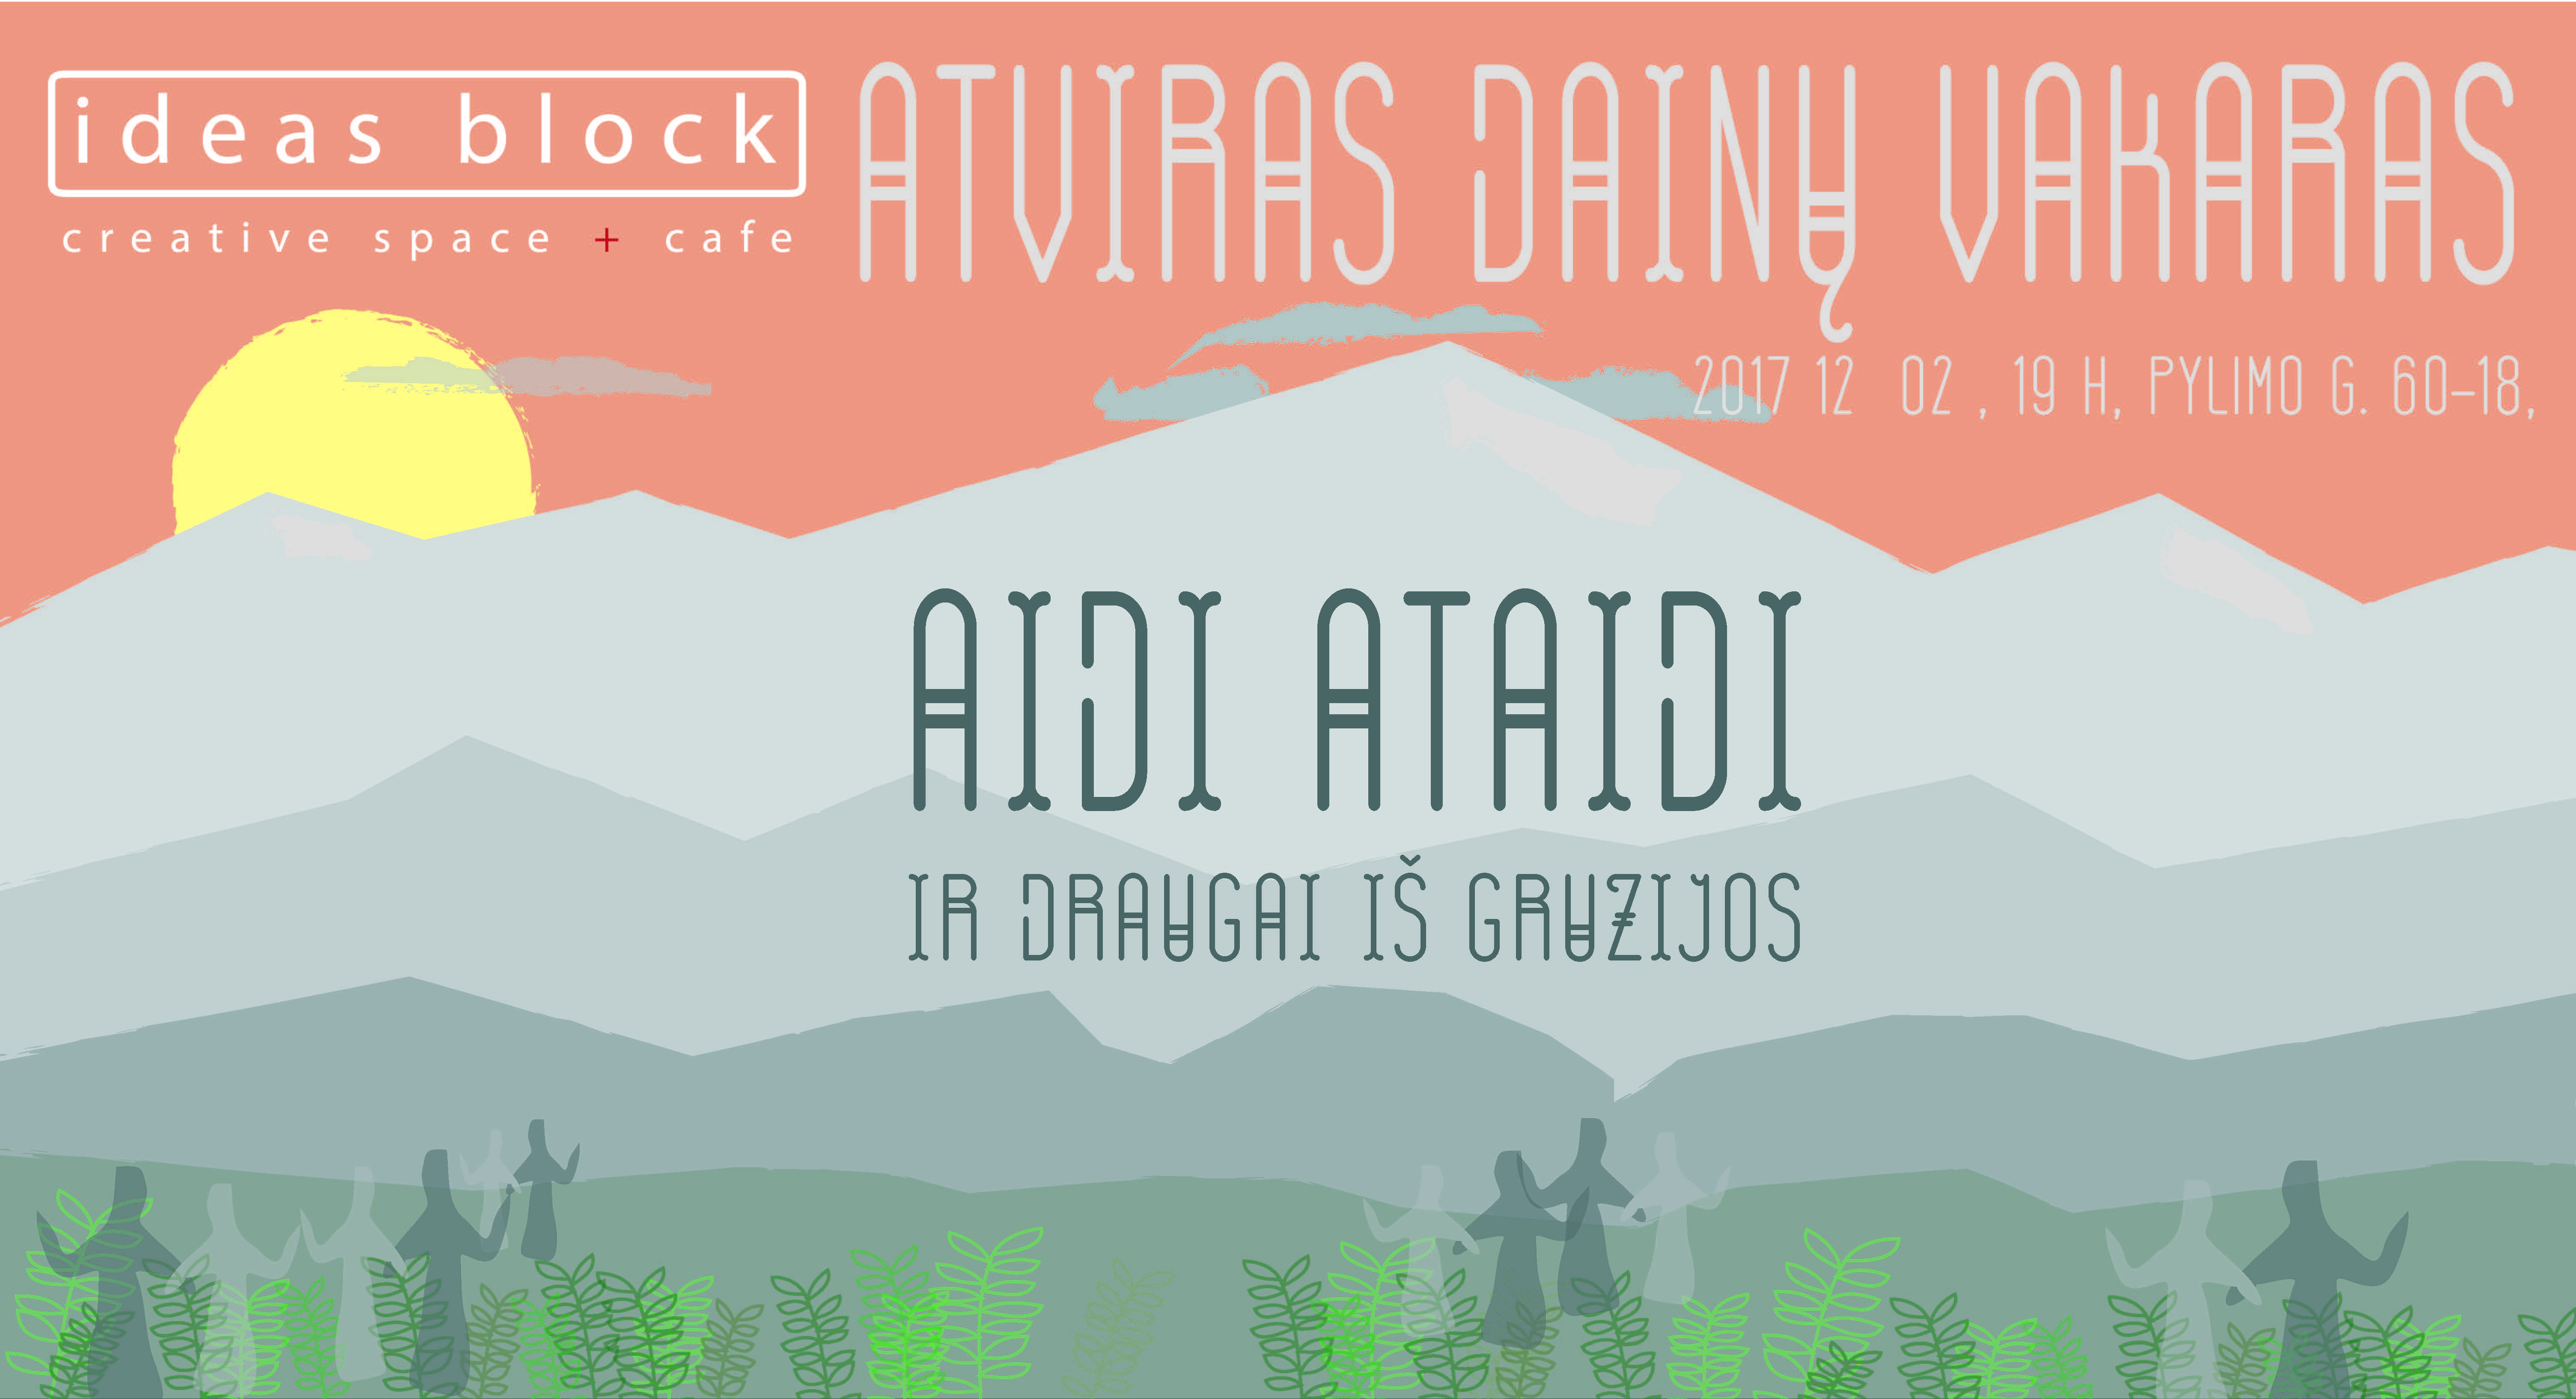 Aidi ataidi - folk songs